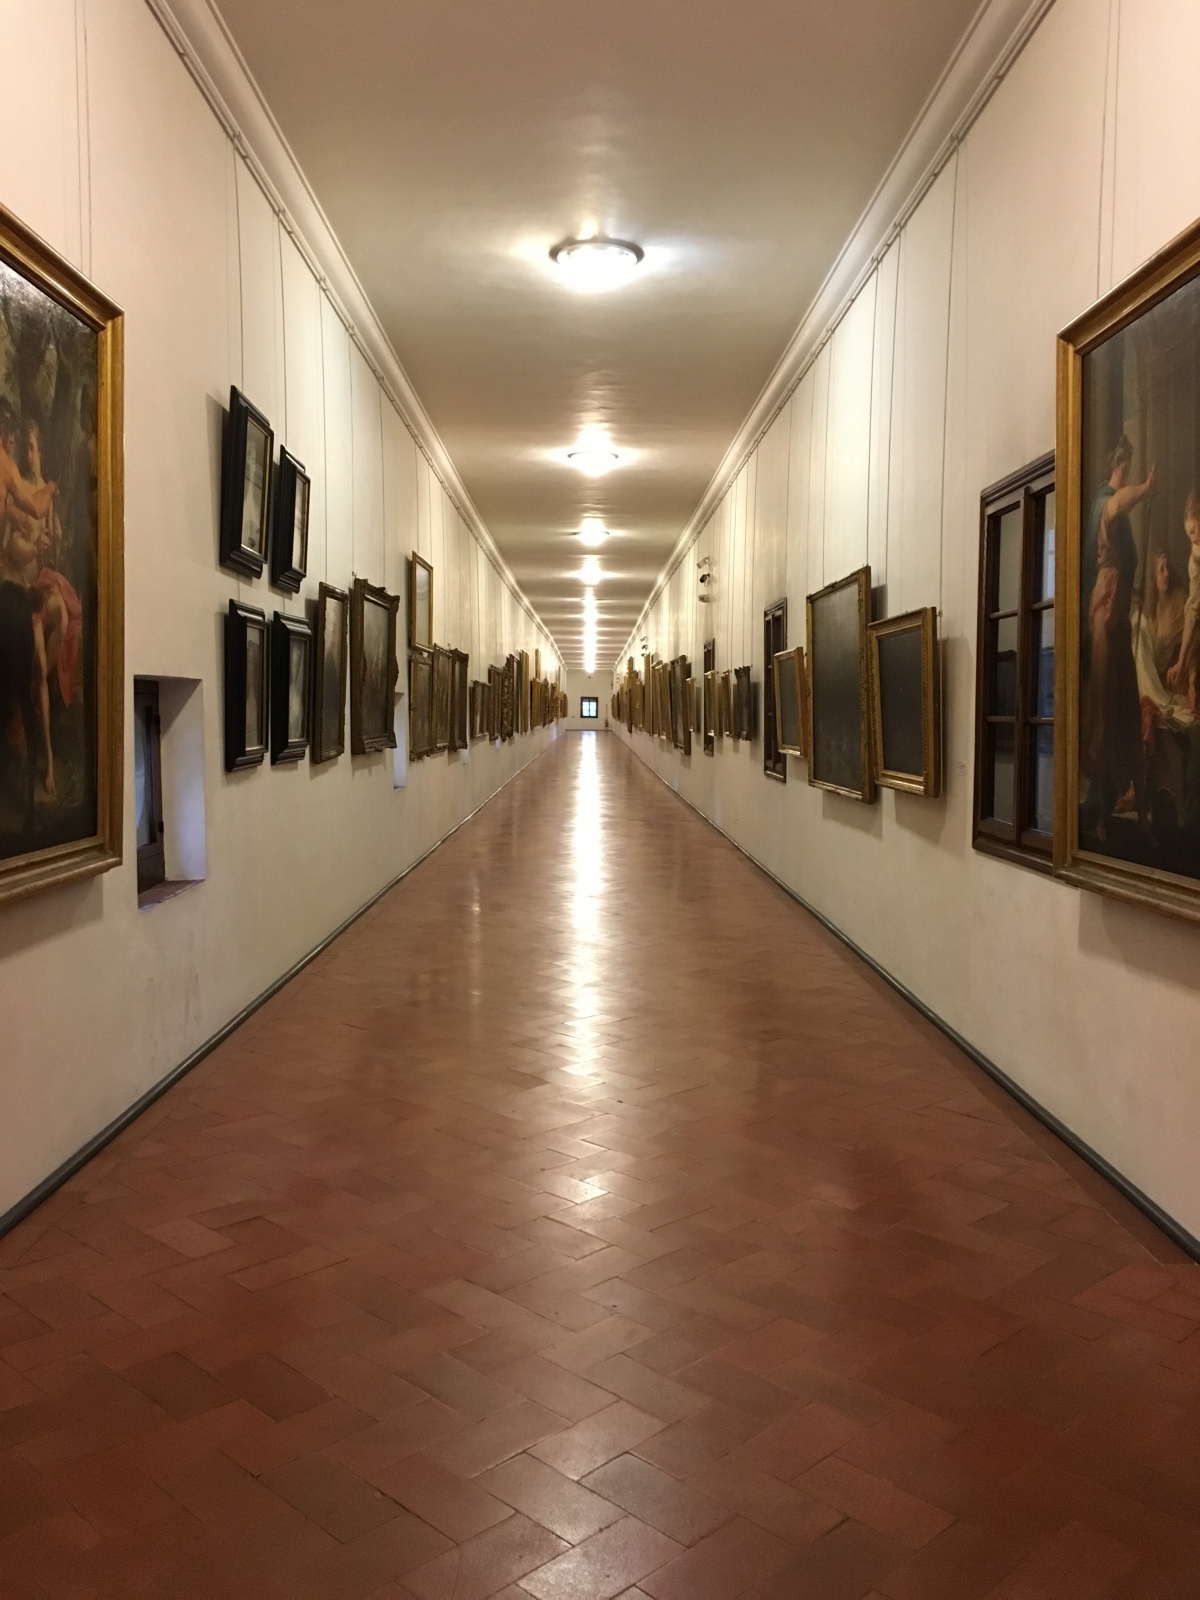 The famed but rarely seen Vasari Corridor